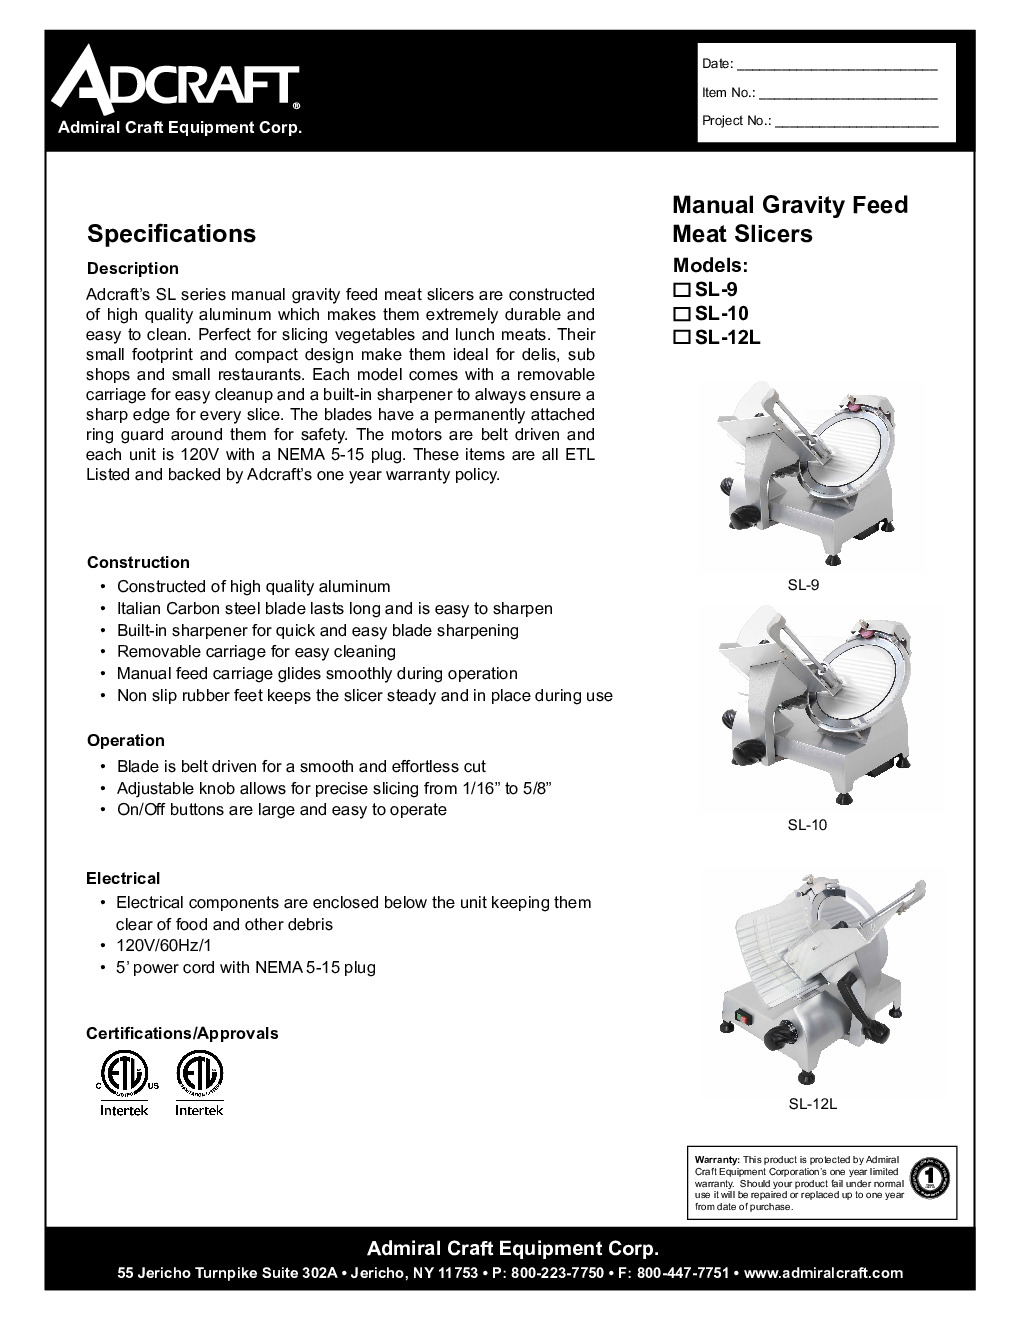 Adcraft SL-10 Manual Gravity Feed Meat Slicer w/ 10